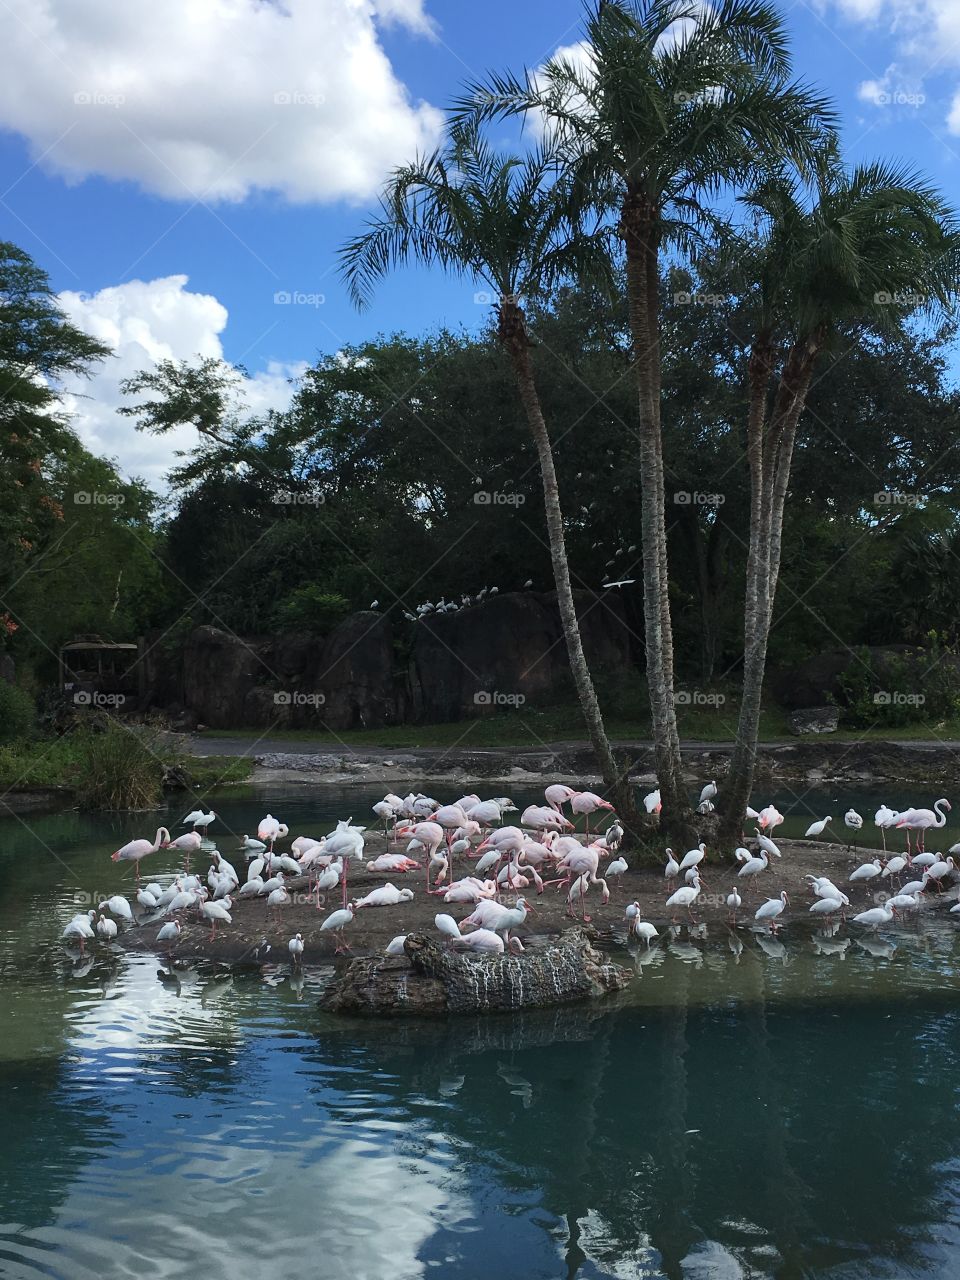 Flamingos. 